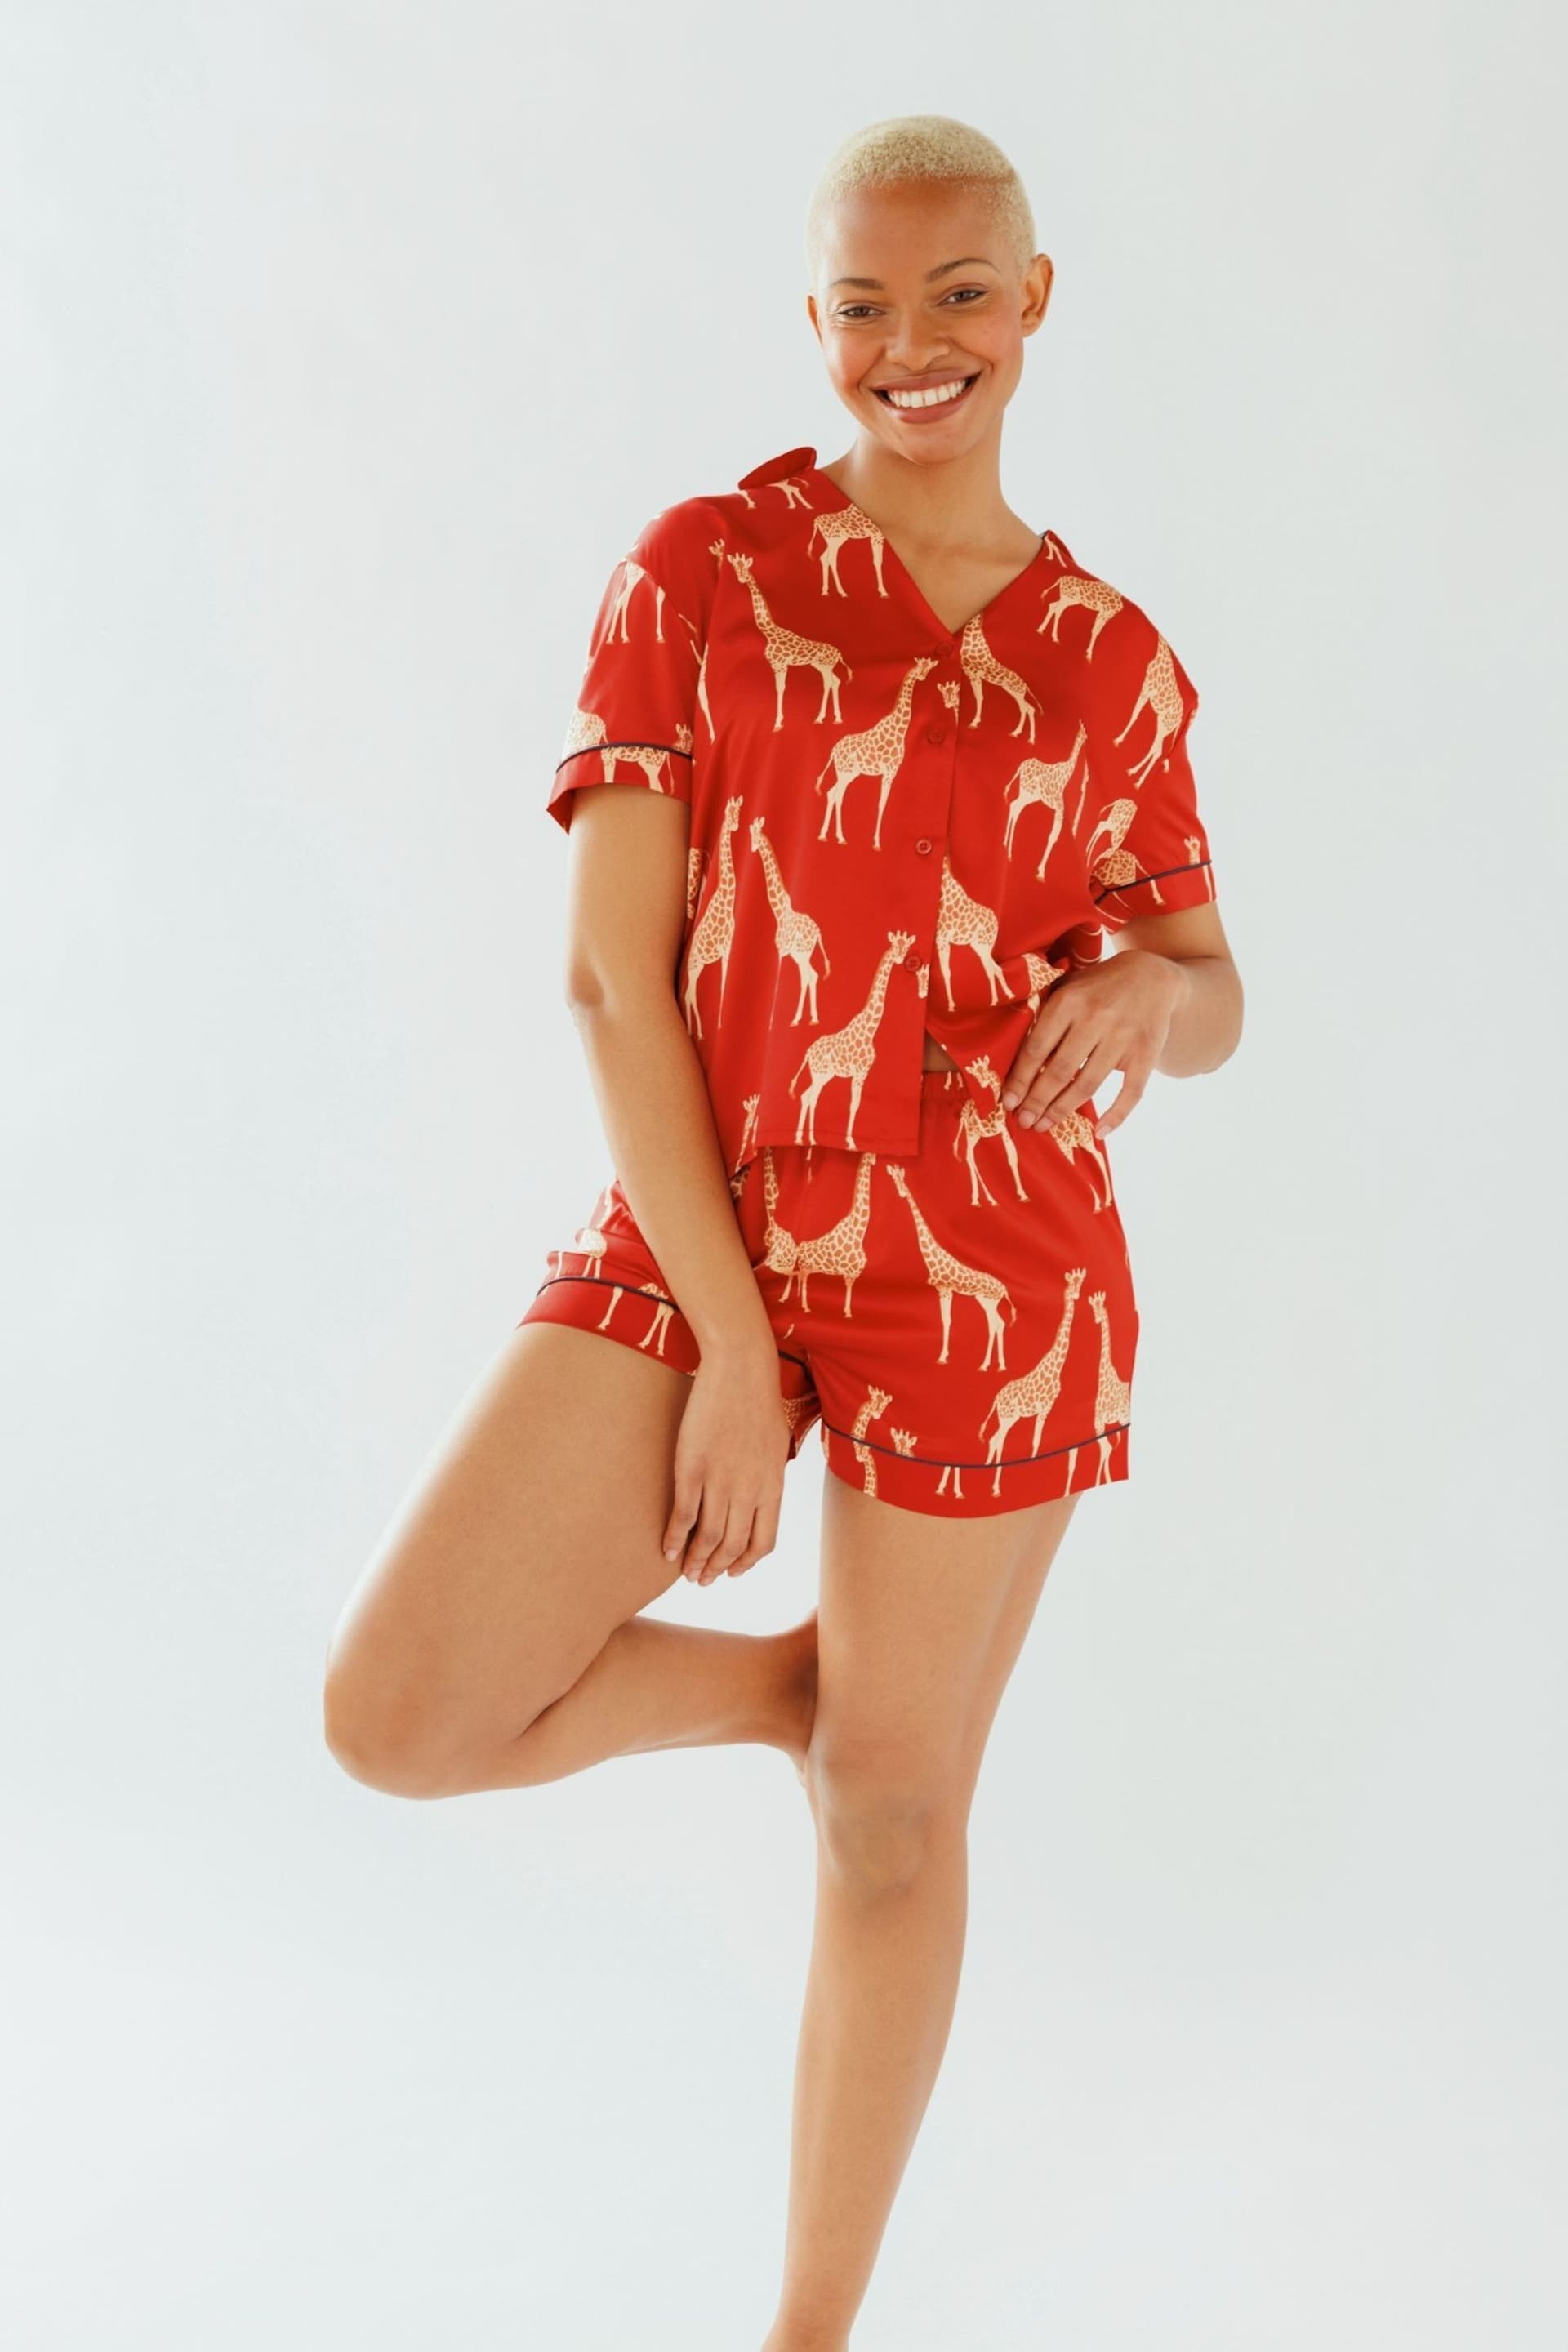 Chelsea Peers Red Satin Giraffe Print Short Pyjama Set - Image 1 of 5